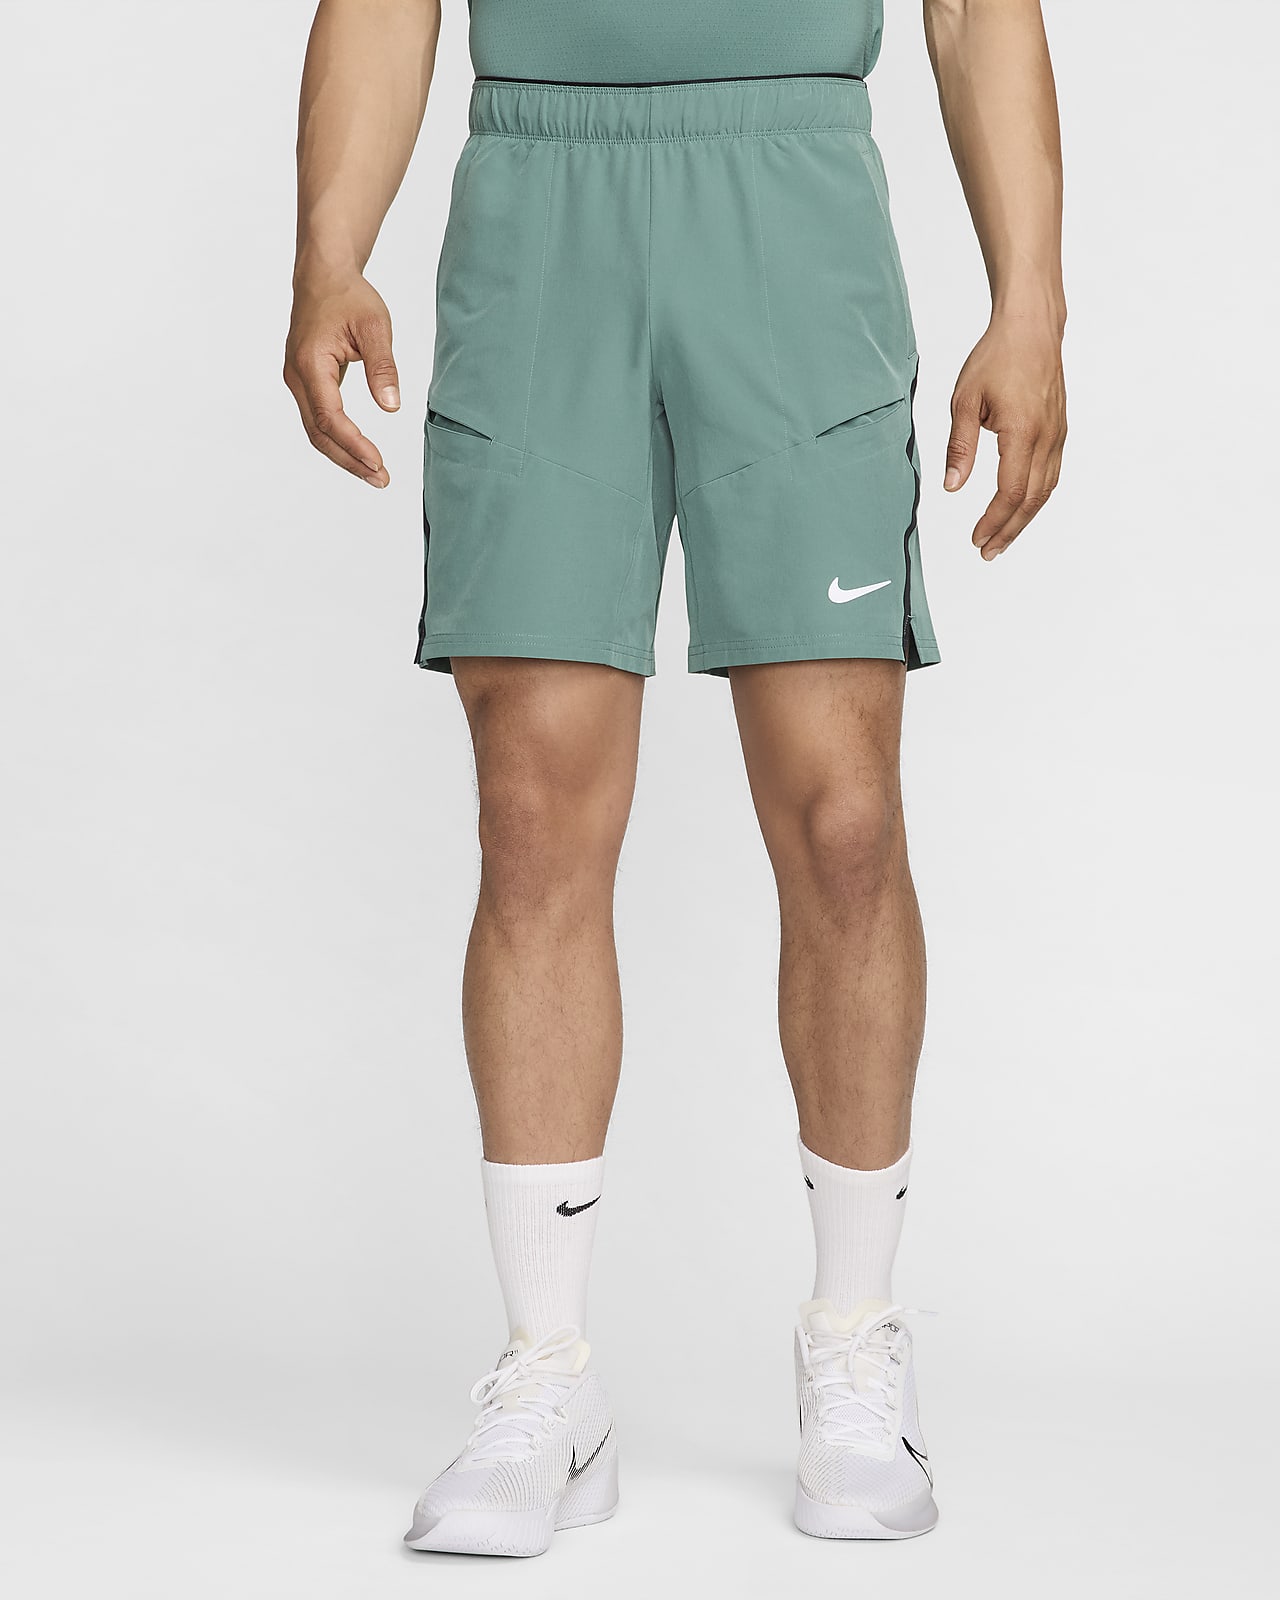 NikeCourt Advantage Men's 9" Tennis Shorts